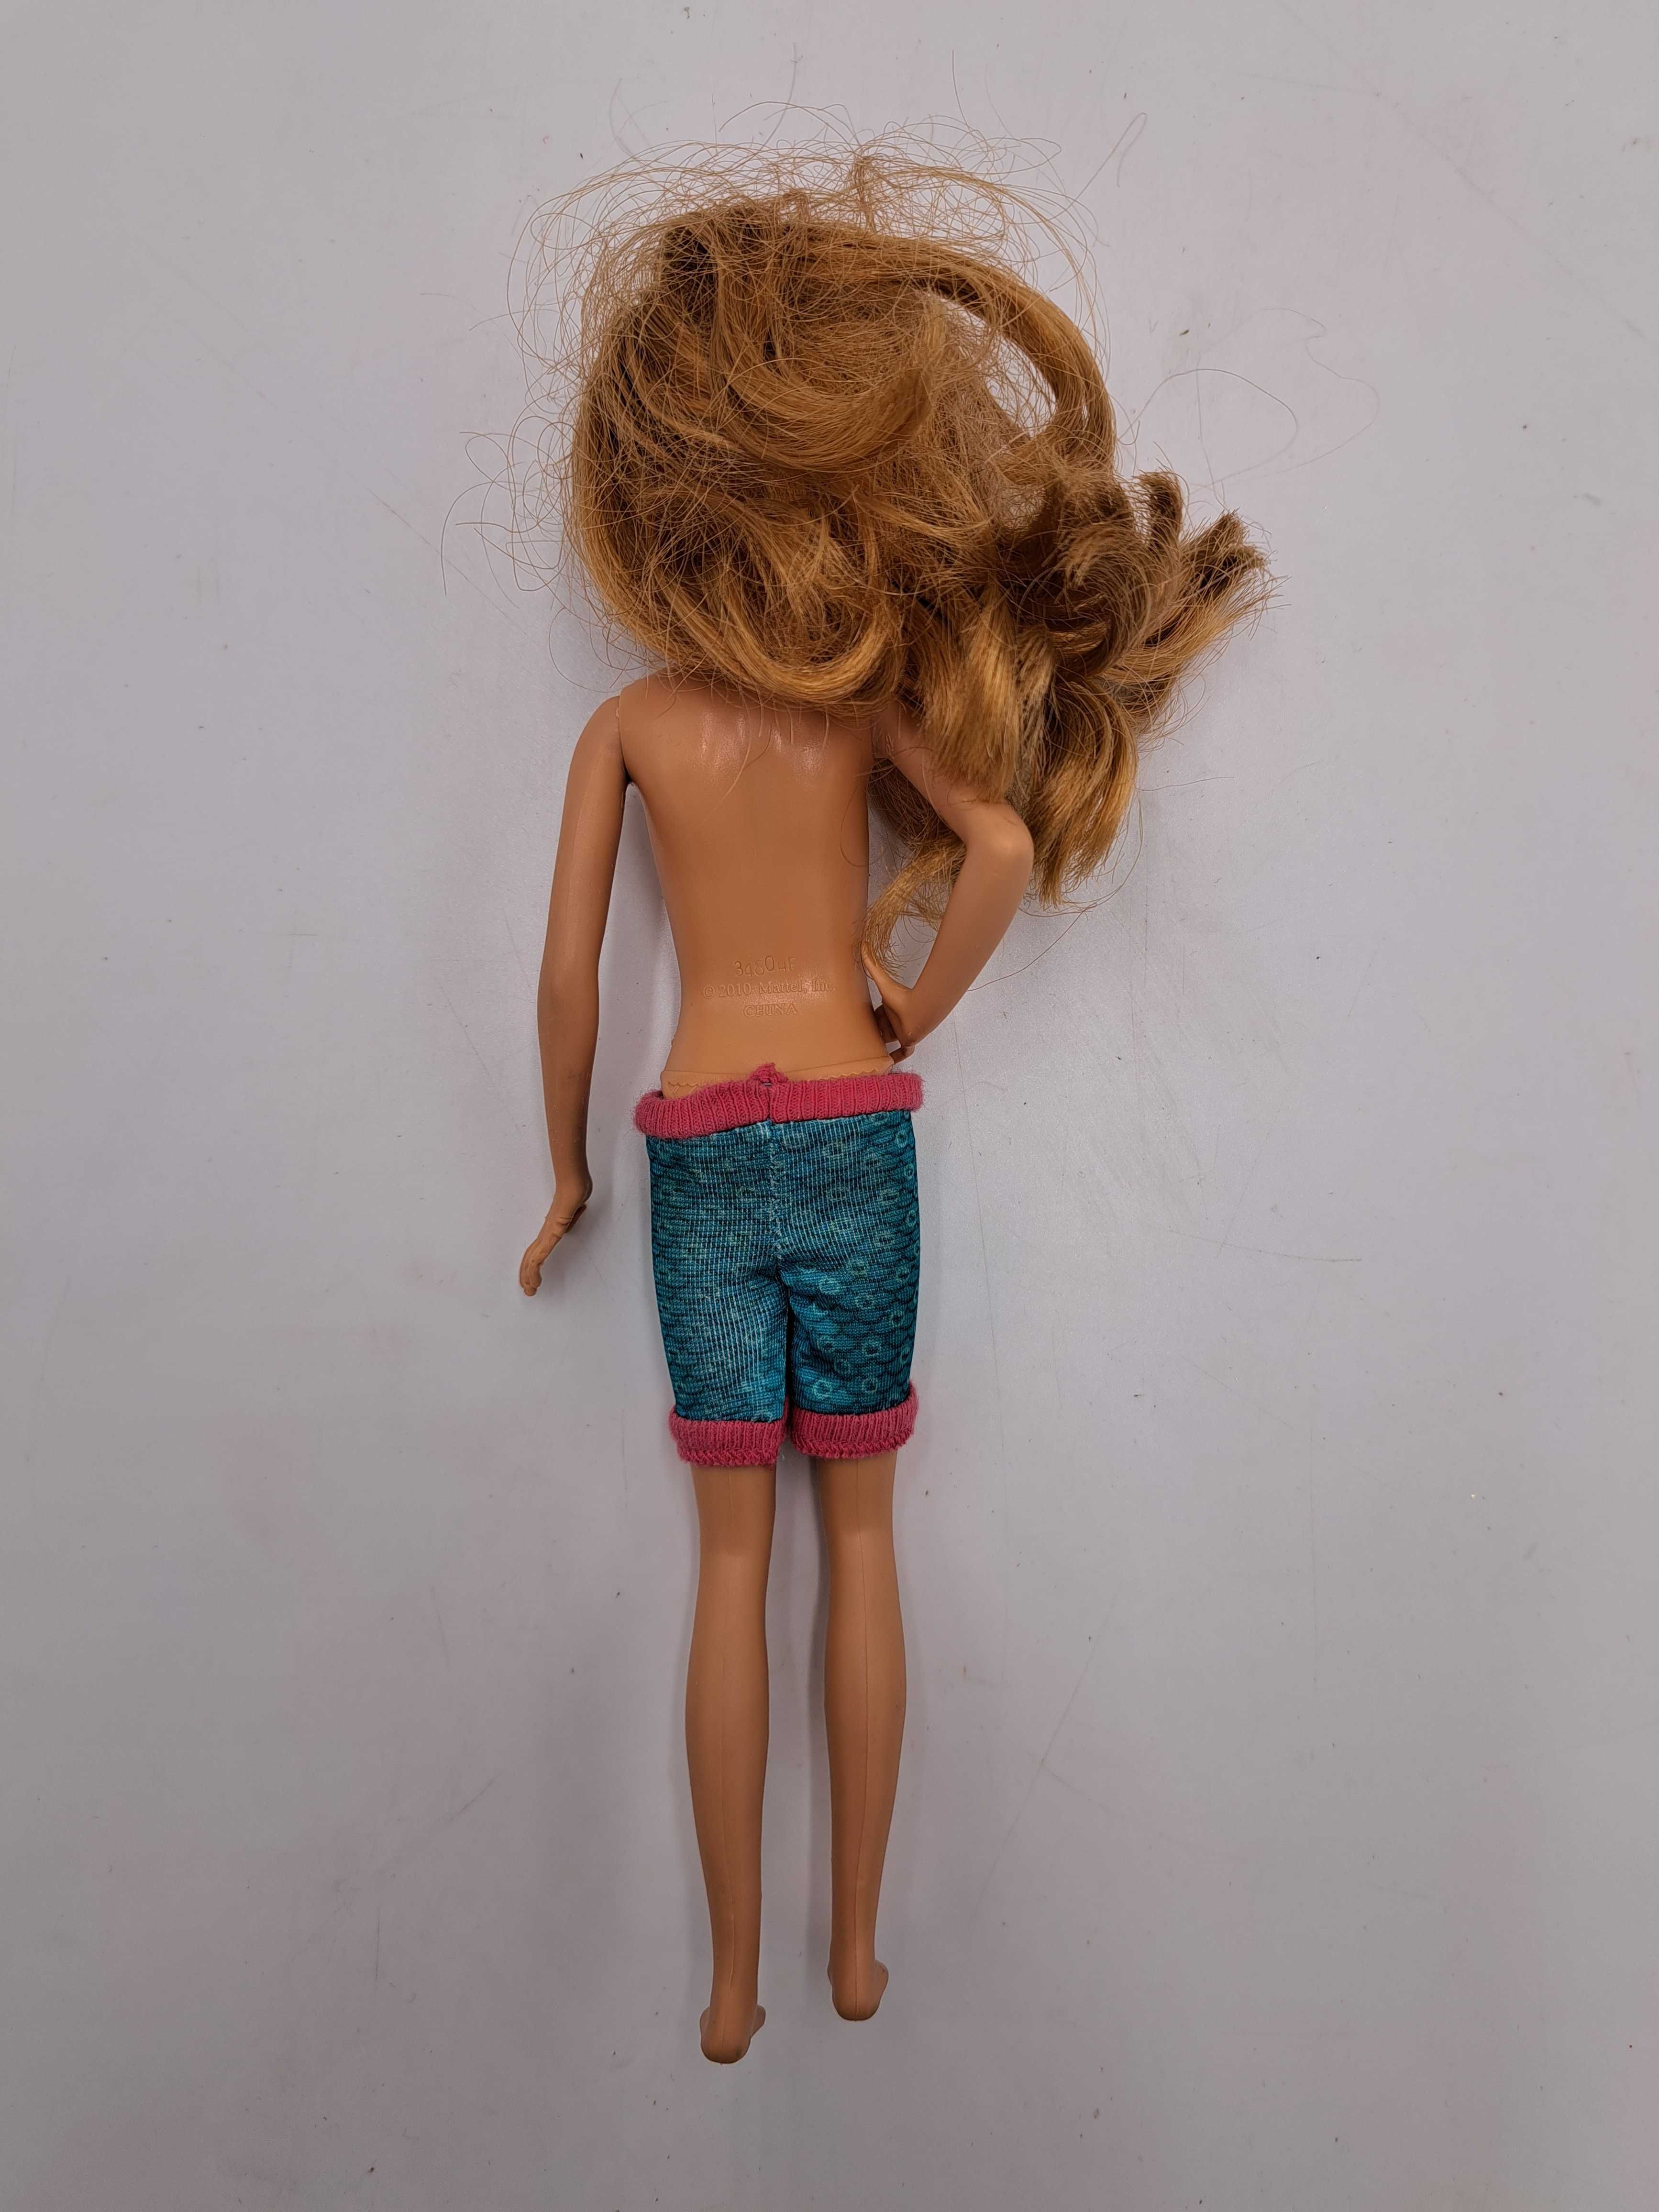 Lalka Barbie Mattel Stacie 2010 nastolatka